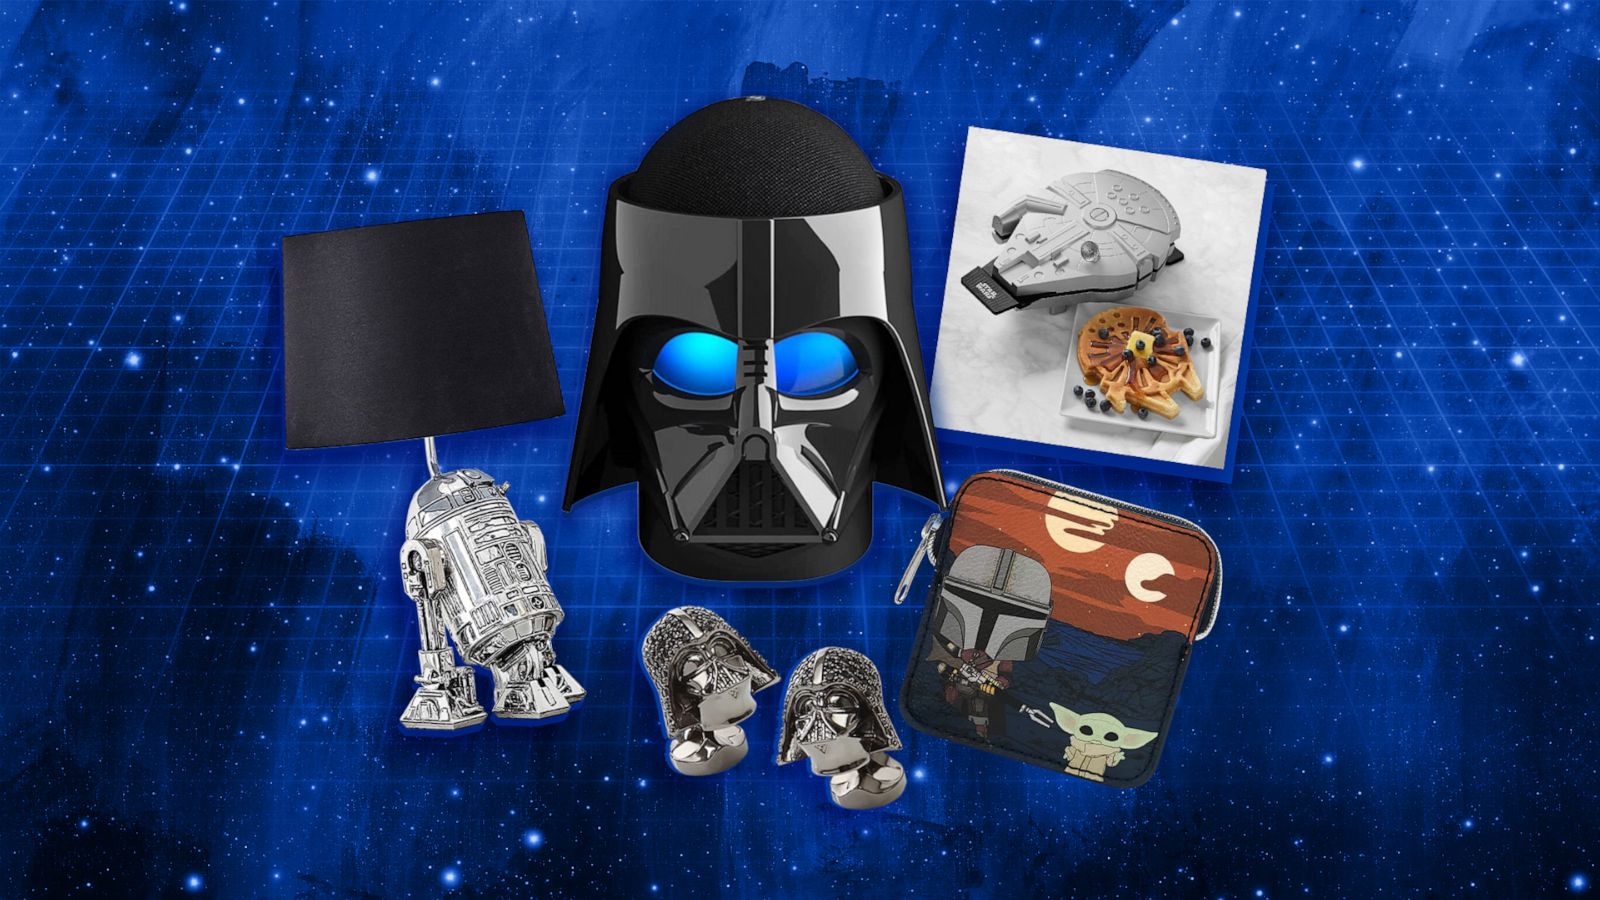 Williams Sonoma Star Wars™ Mini Waffle Maker Set: Death Star & Darth Vader